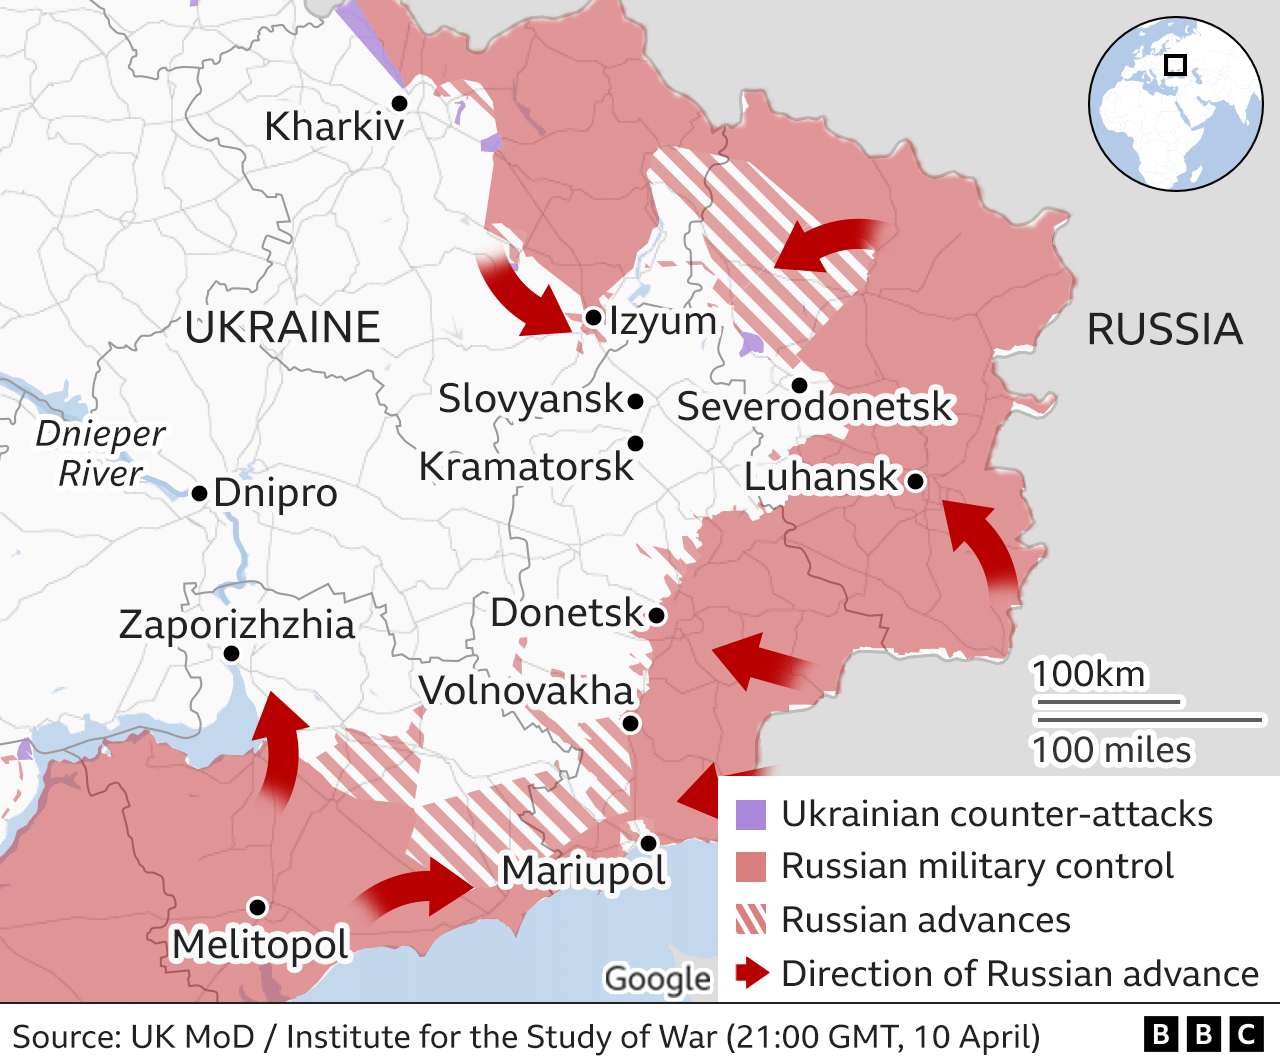  124122415 Ukraine Invasion East Map  Nc 